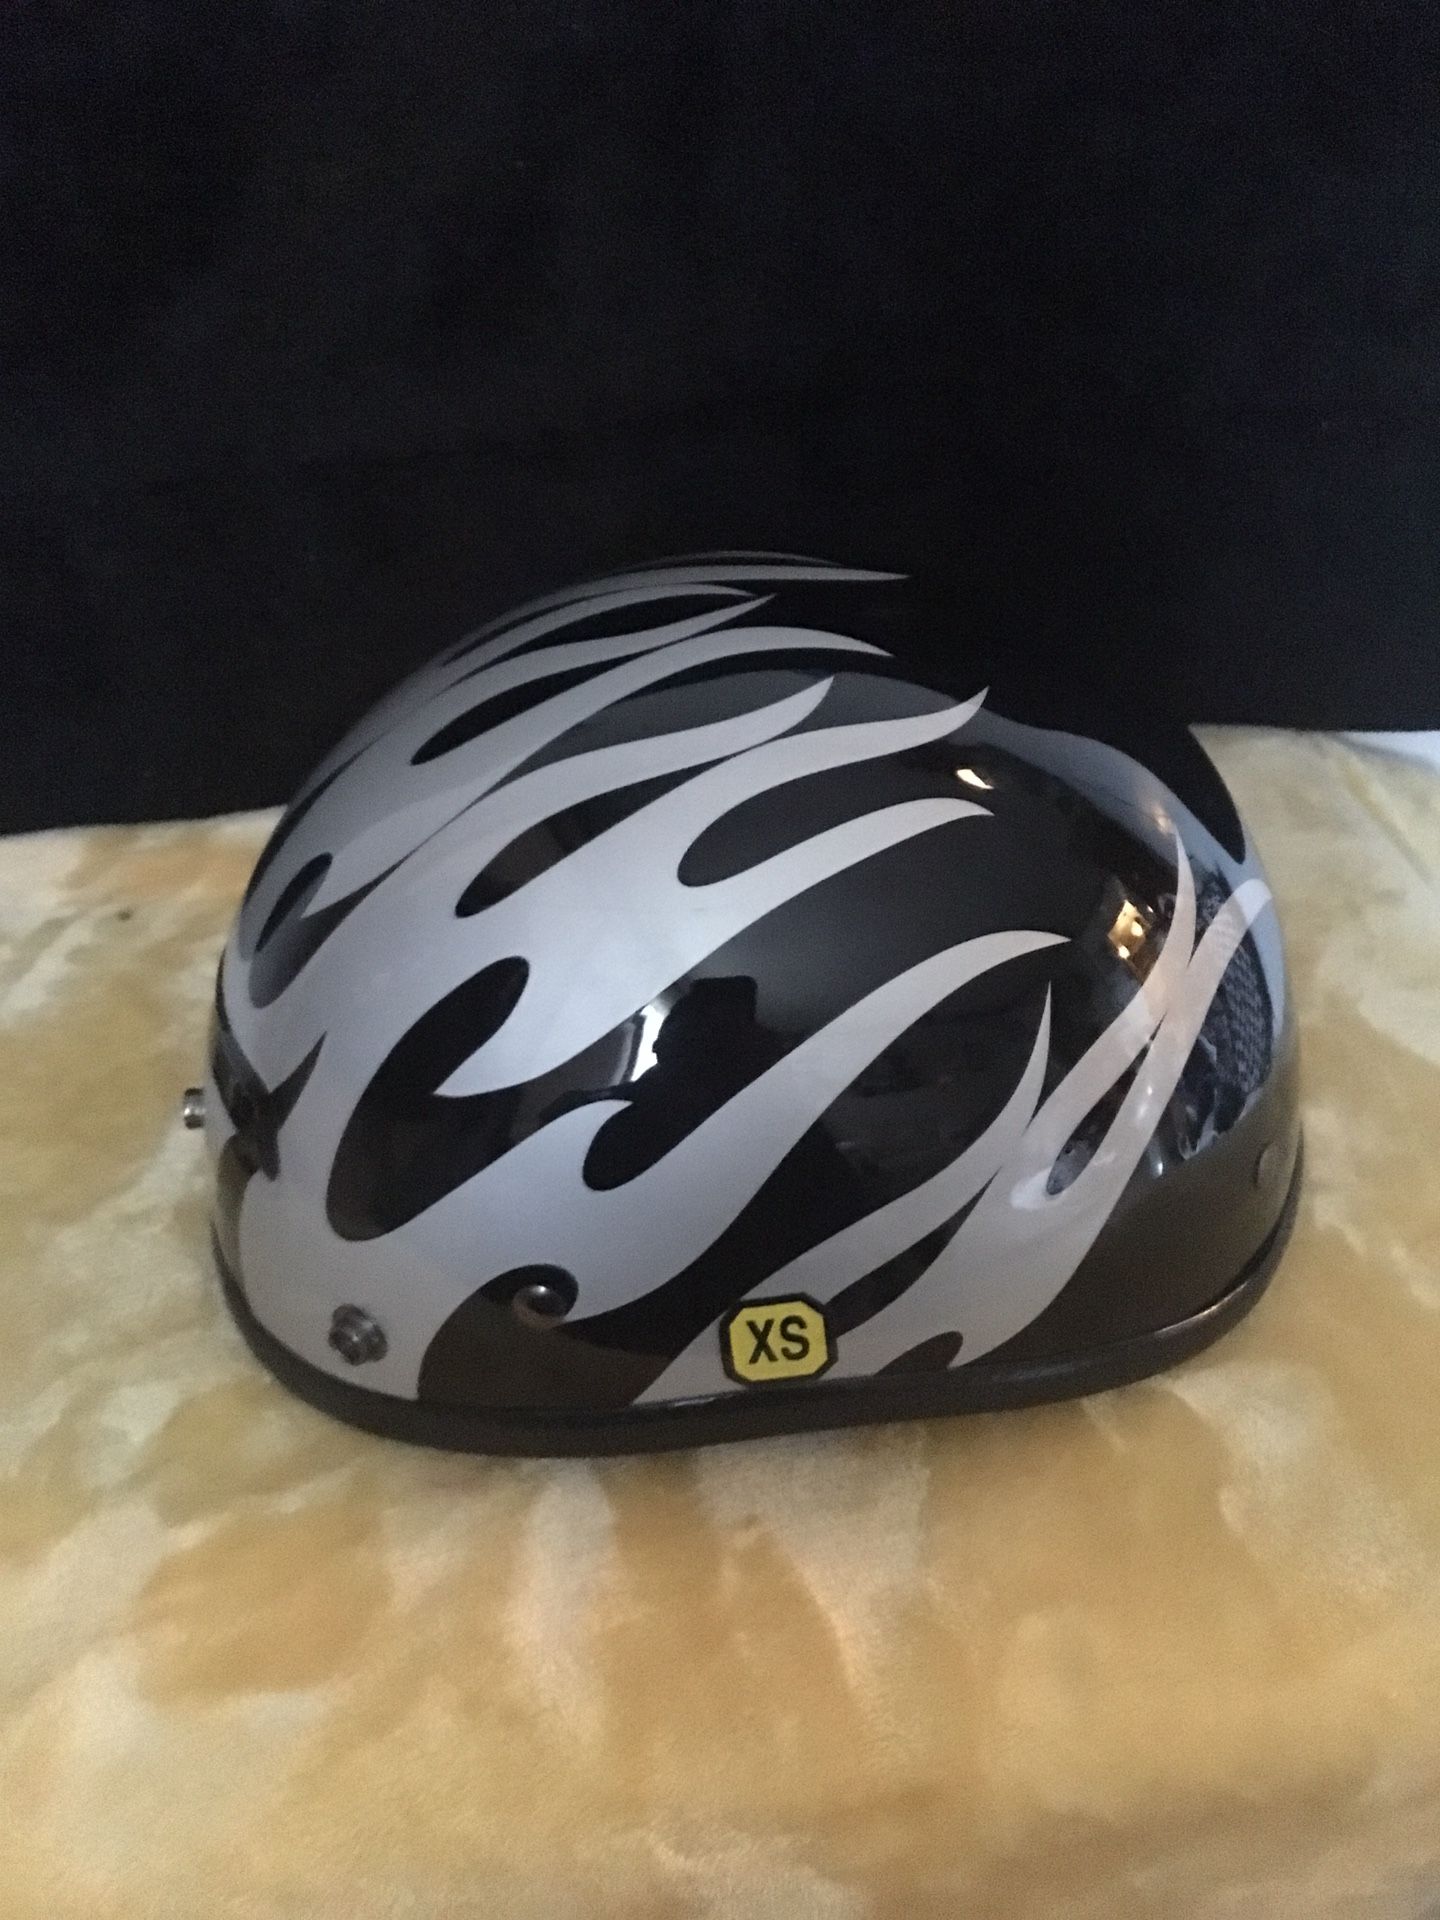 Motorcycle helmet XS size